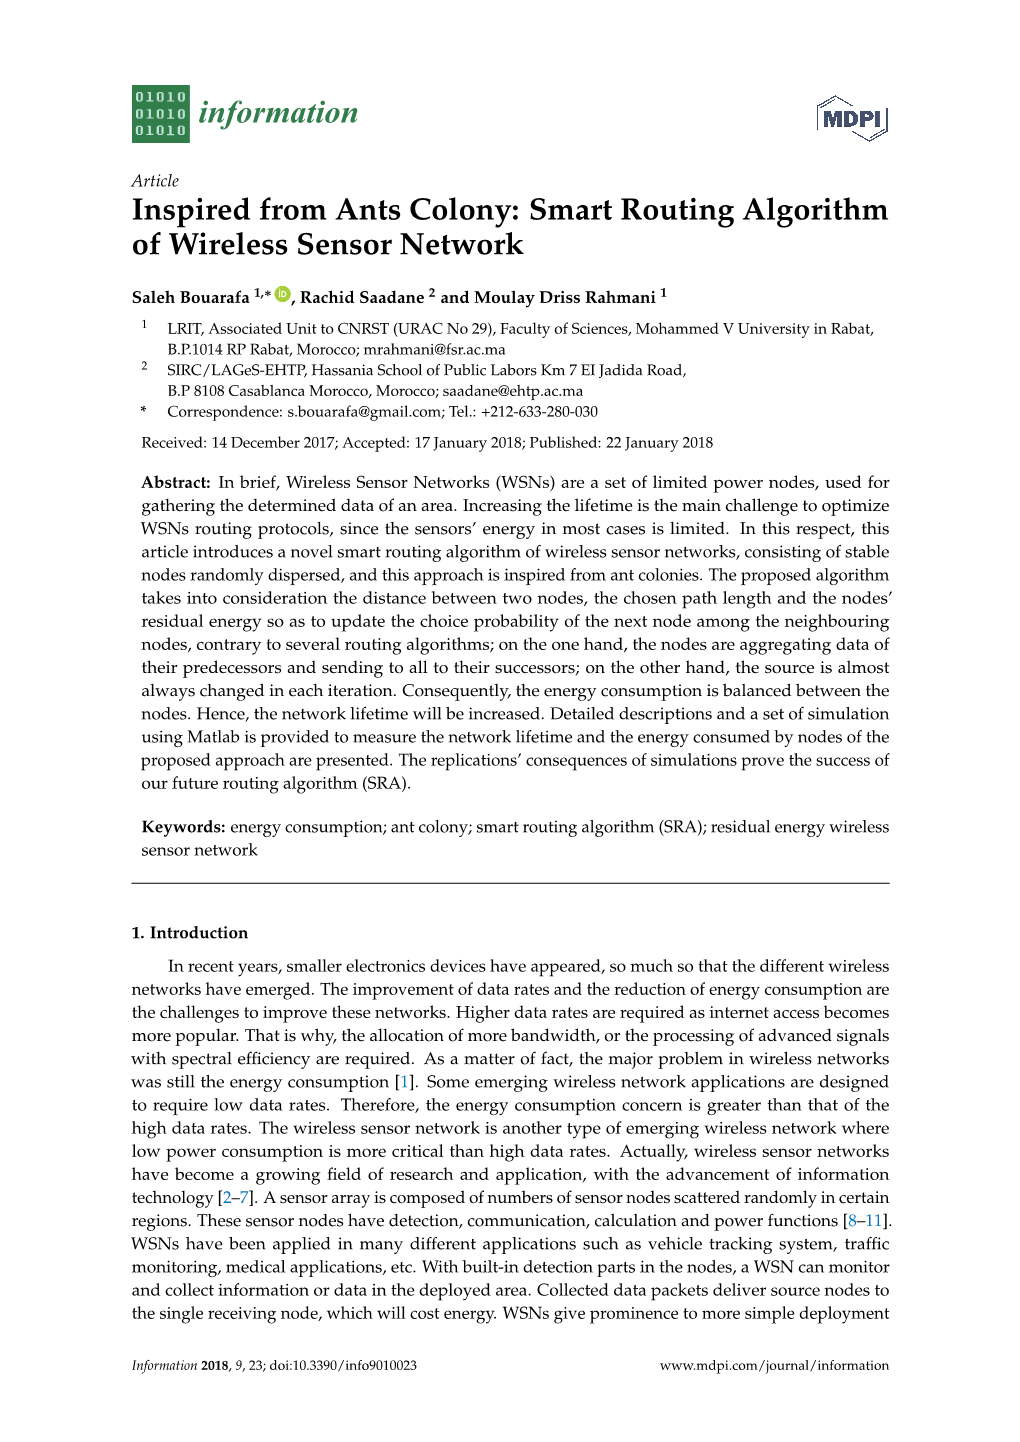 Smart Routing Algorithm of Wireless Sensor Network